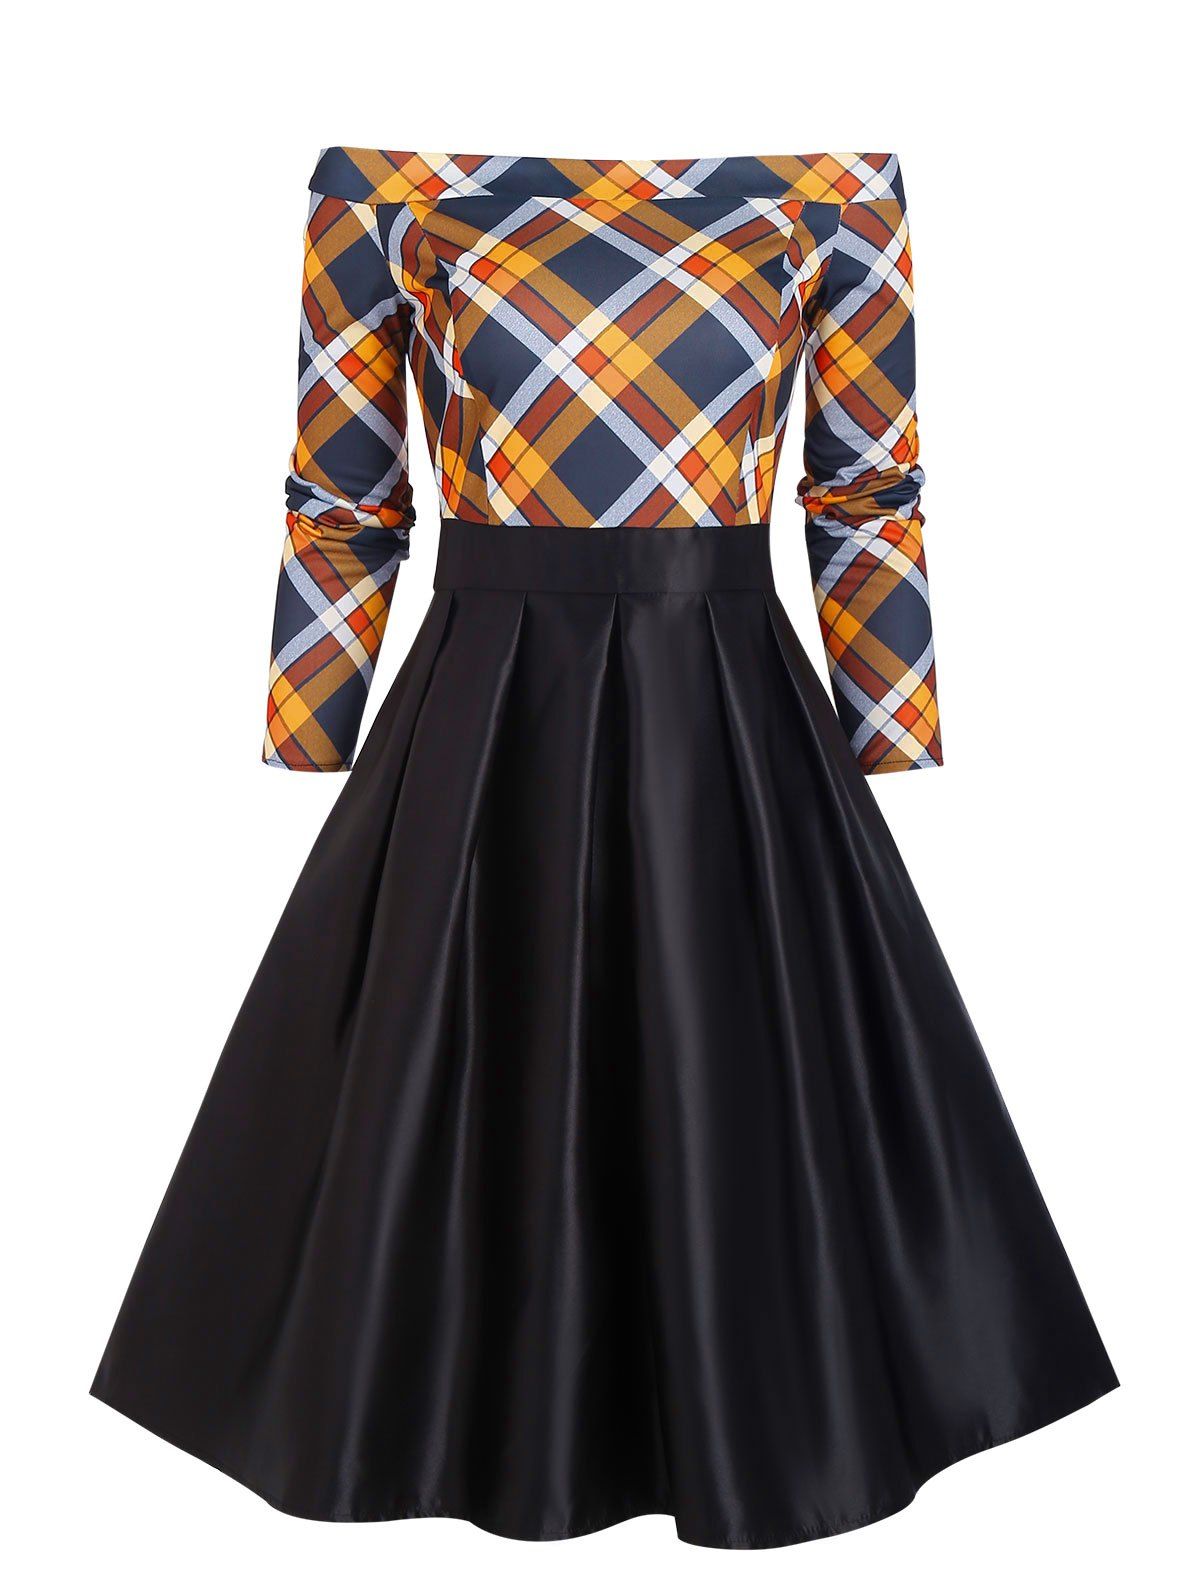 Plaid Print Vintage Dress Off The Shoulder Dress Long Sleeve Pleated Detail A Line Dress - YELLOW M